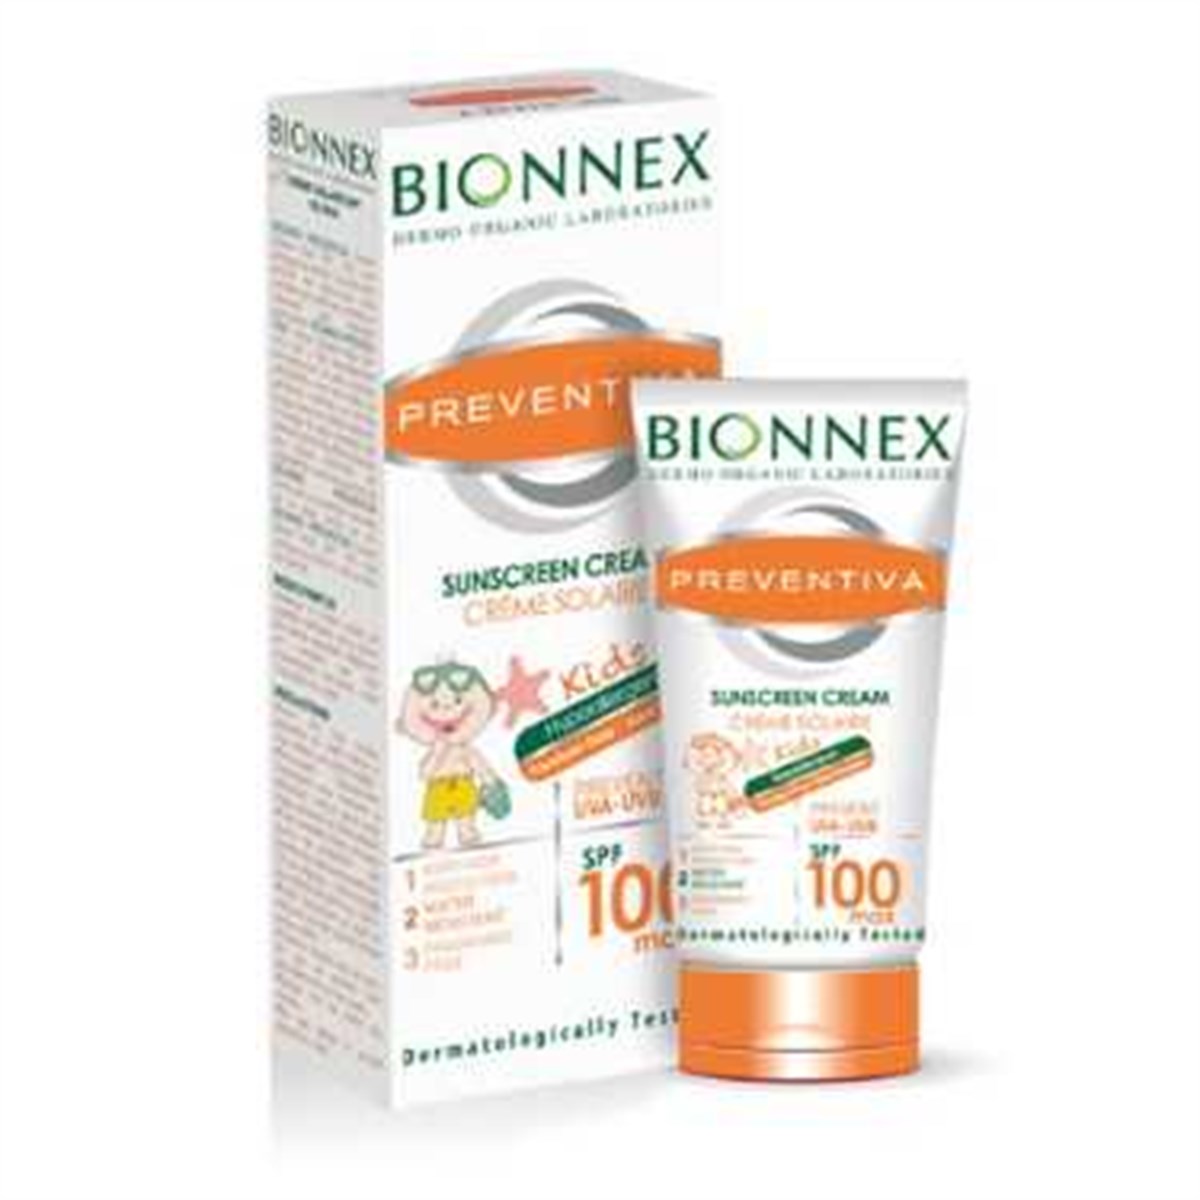 Bionnex Preventiva Çocuk Güneş Kremi Max Spf 100 50ml Fiyatları |  Dermosiparis.com